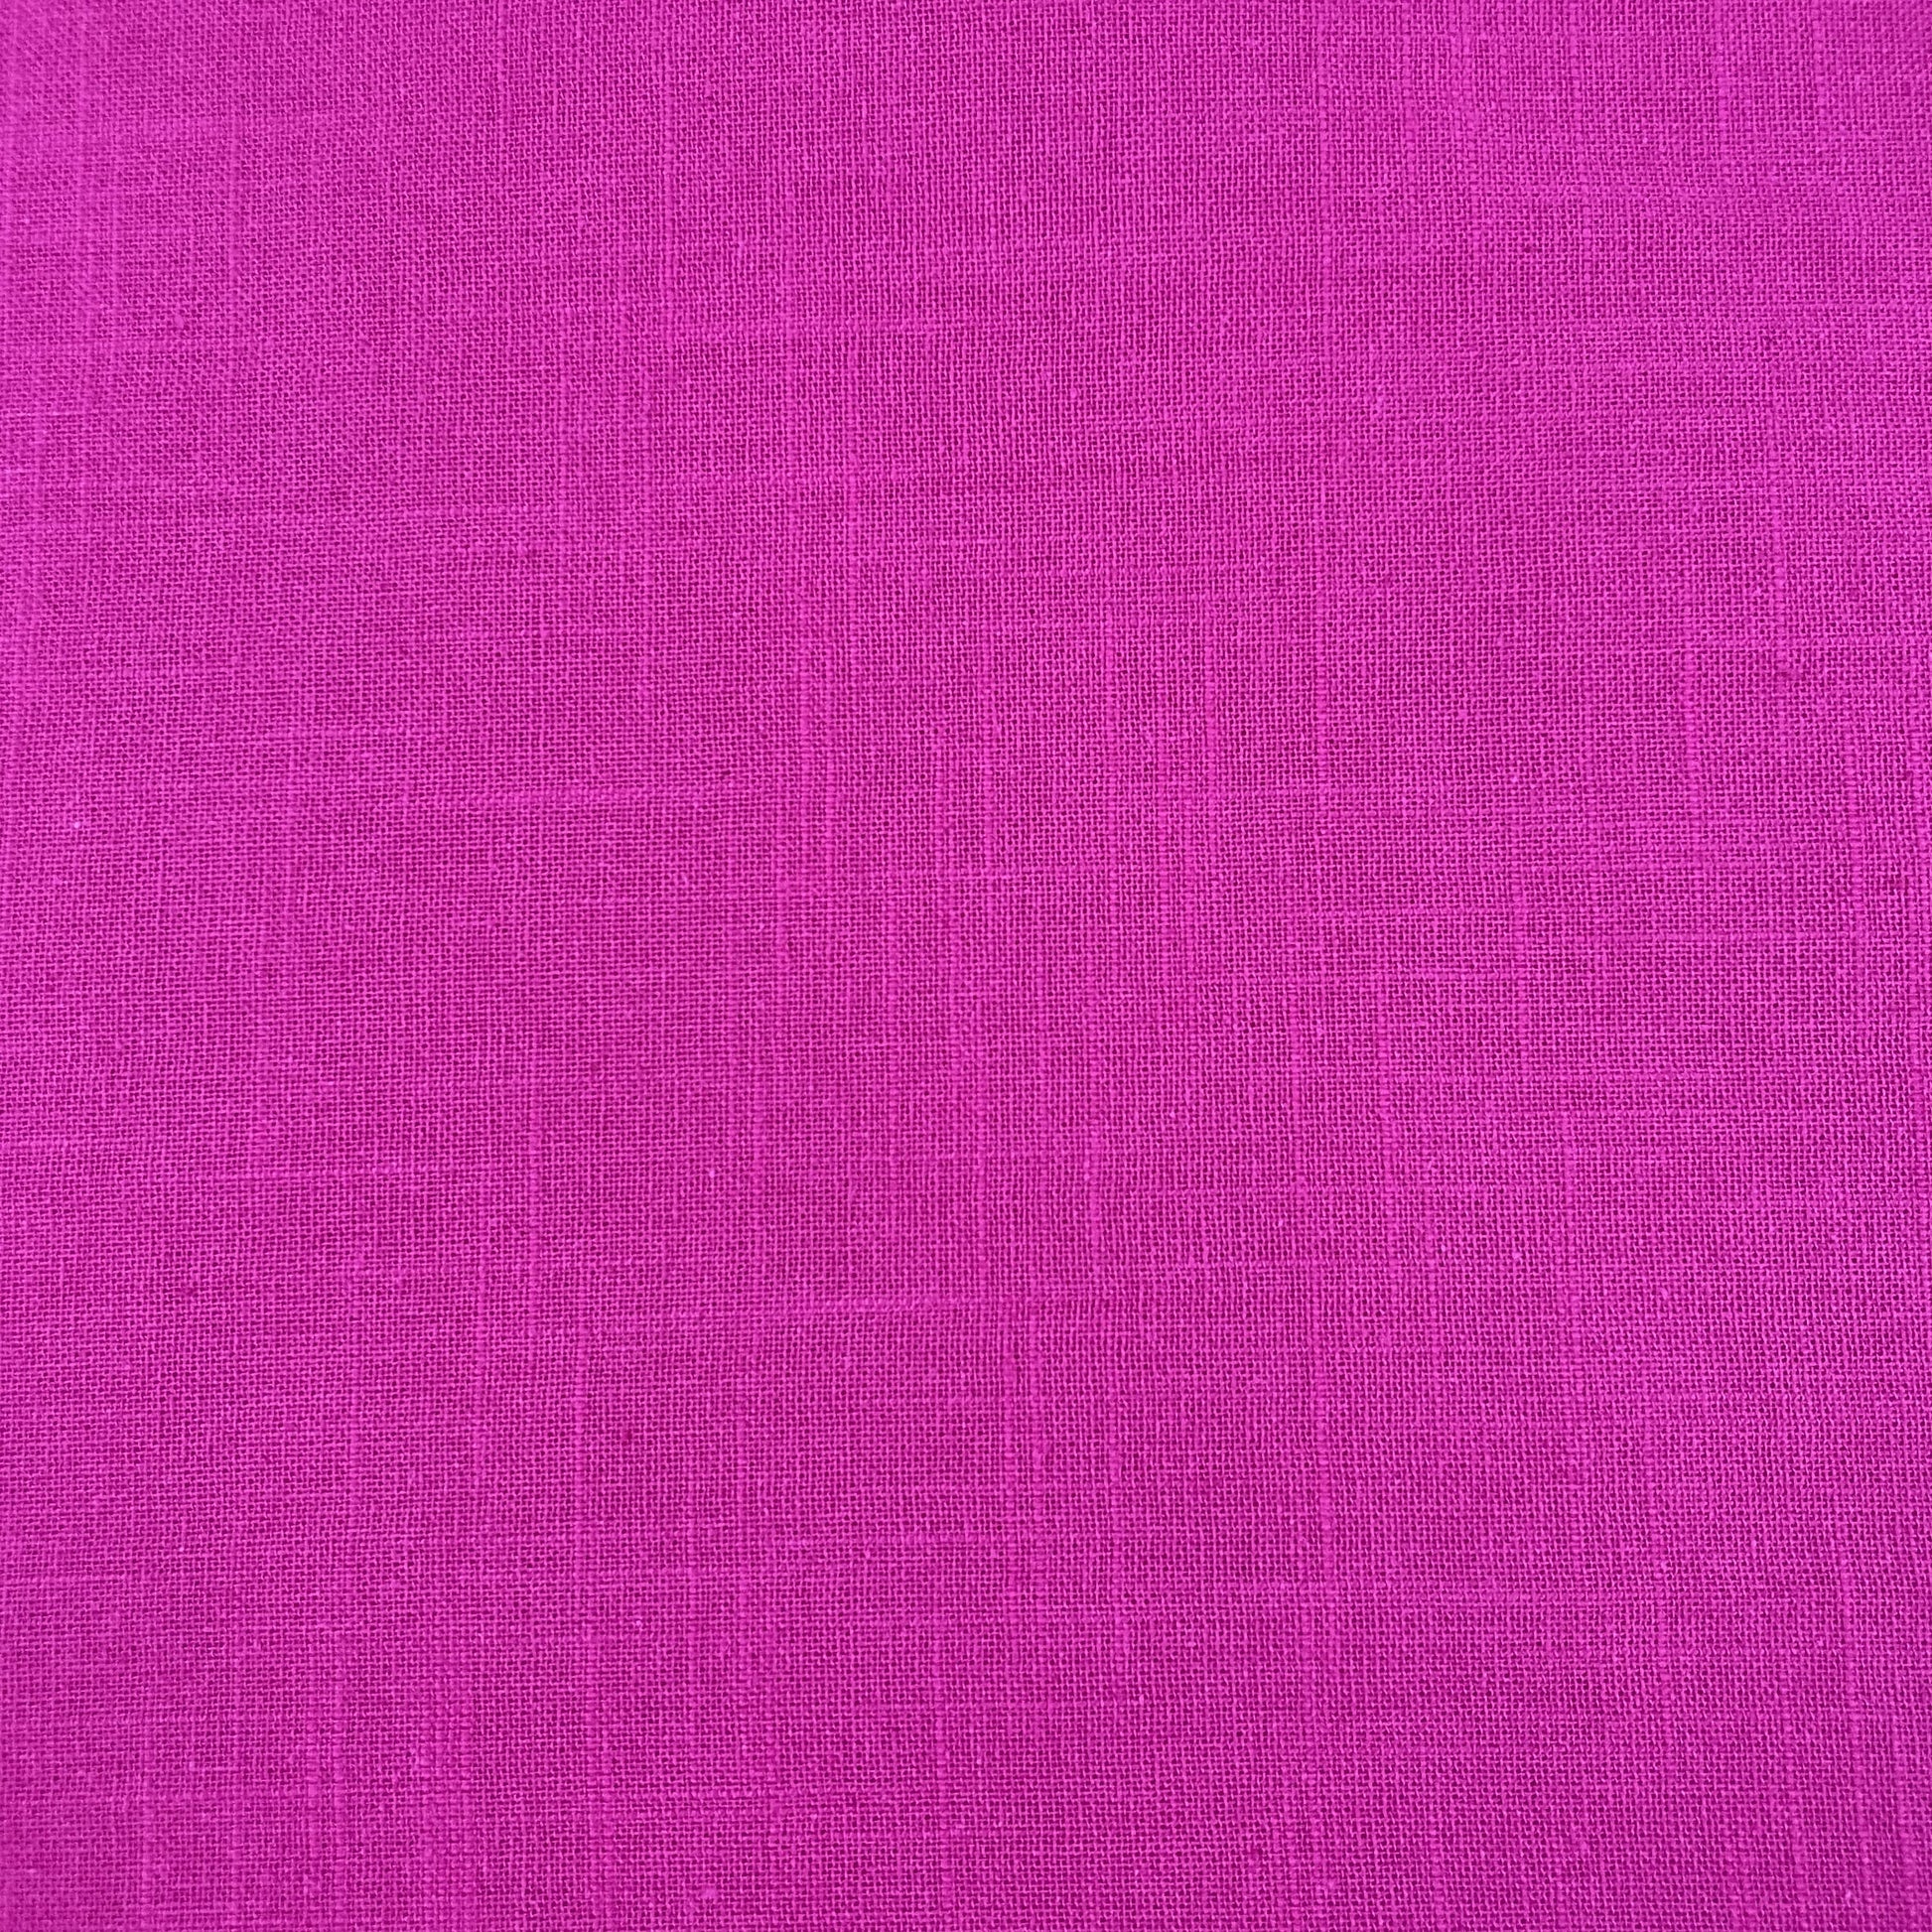 Exclusive Cotton Linen Slub Dark Pink Solid Fabric Fabric